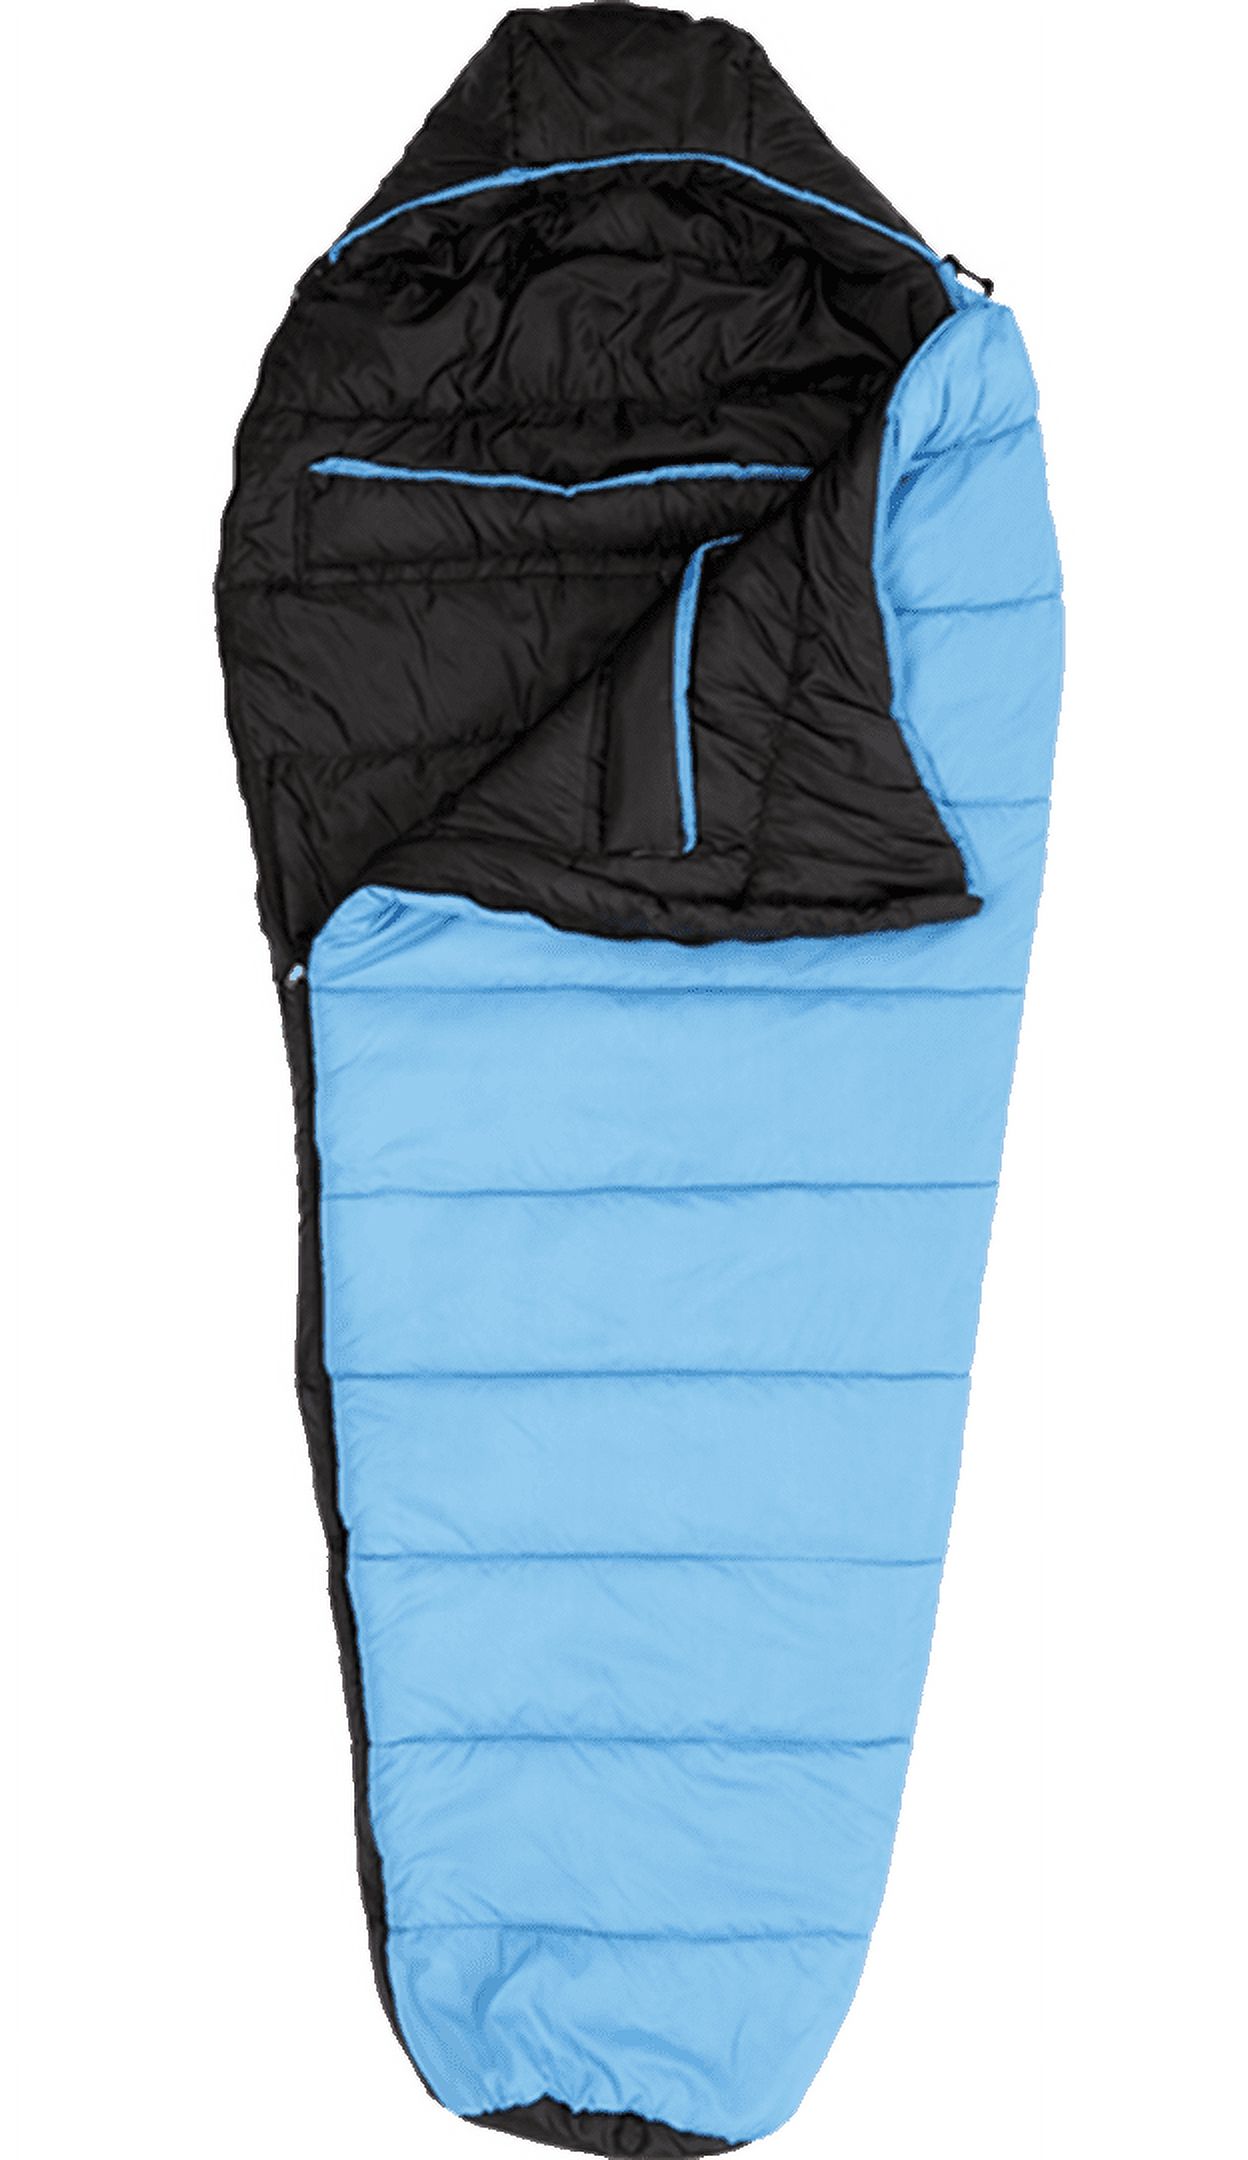 Exxel Everest Mummy +5F/-15C Degree Sleeping Bag - image 2 of 9